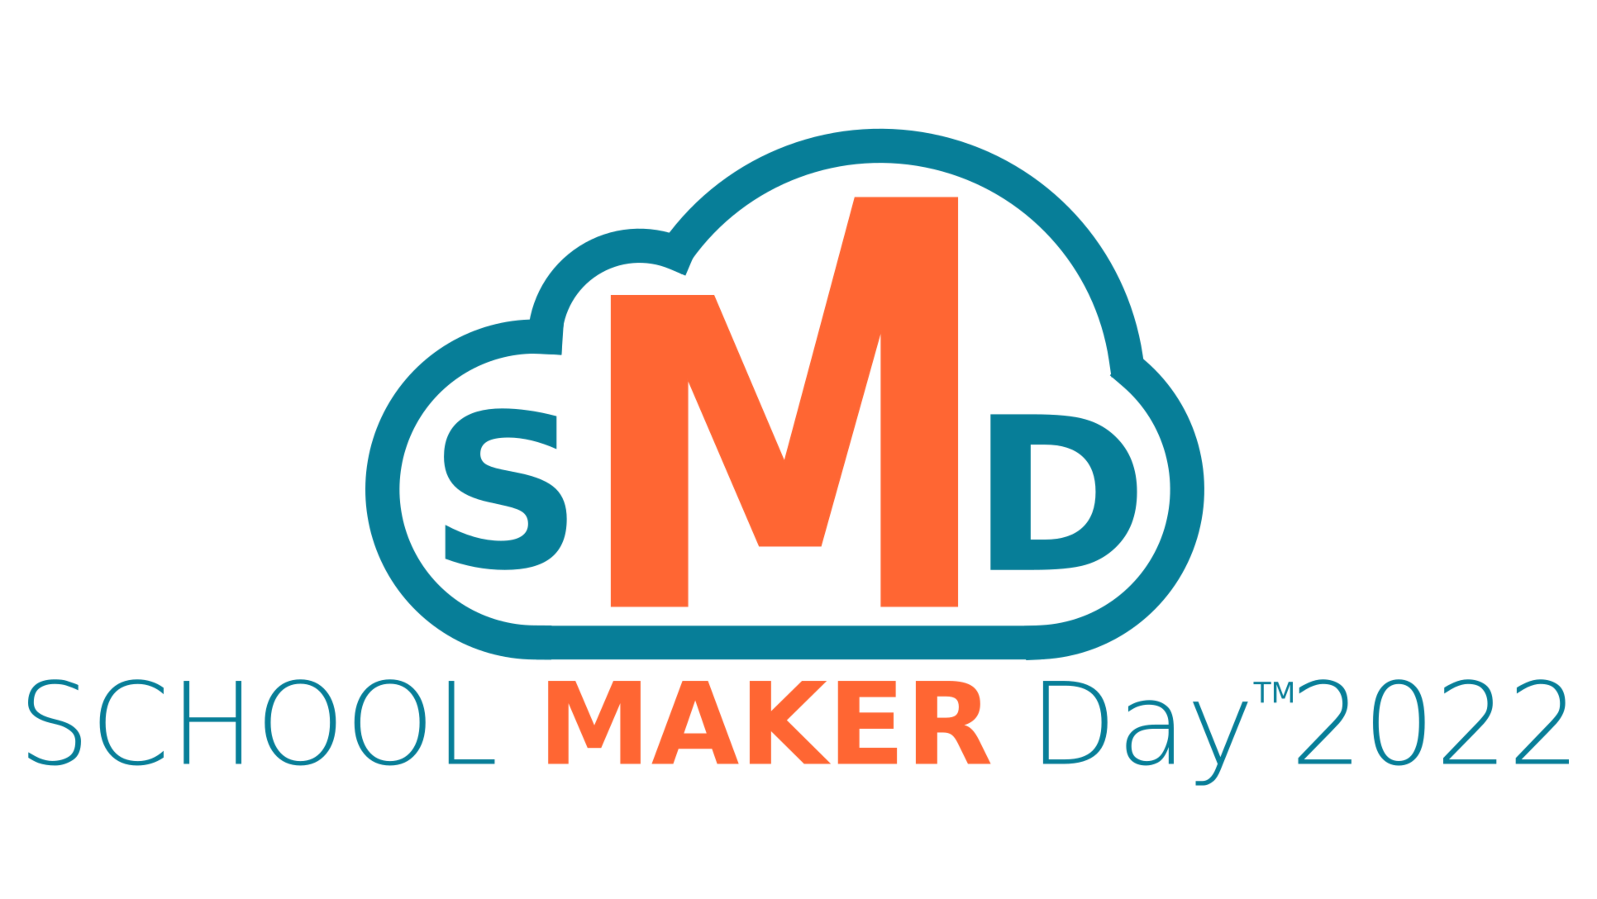 School Maker Day 2022 CodyMaze